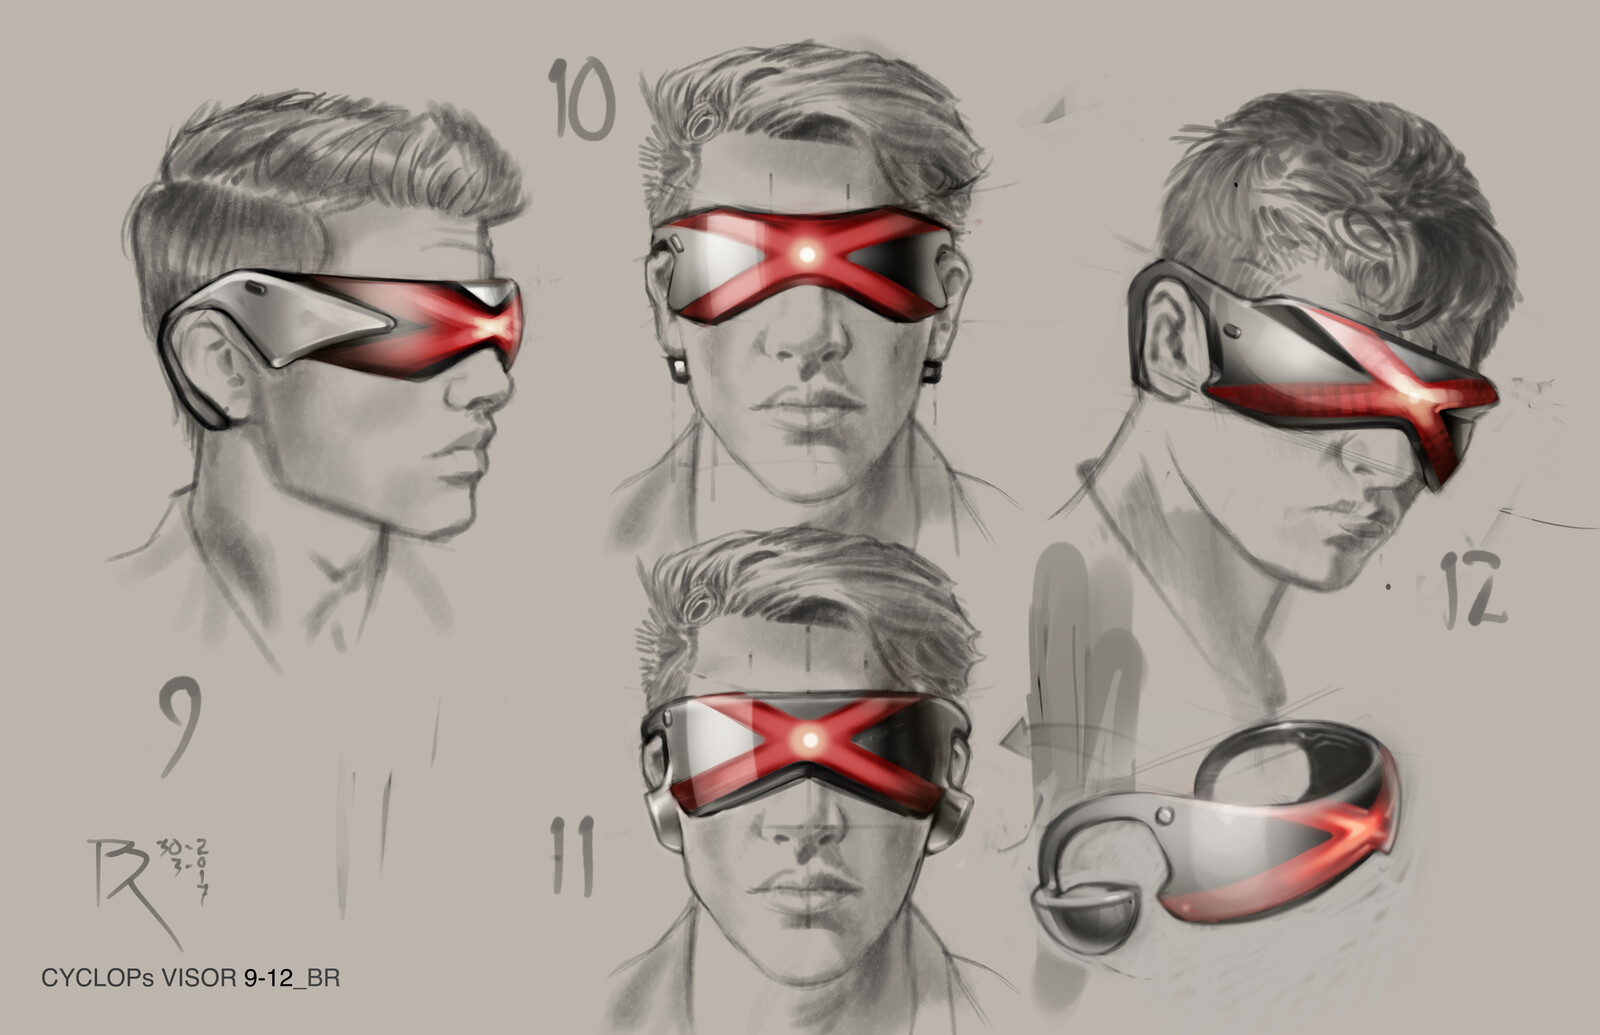 Cyclops' Visor 9-12